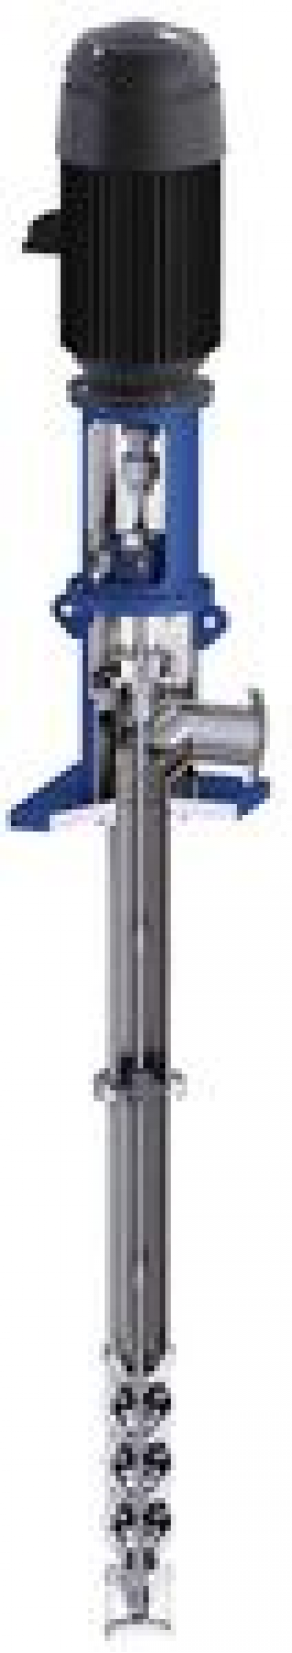 Turbine pump / vertical / for mining - max. 35 000 gpm | Floway series